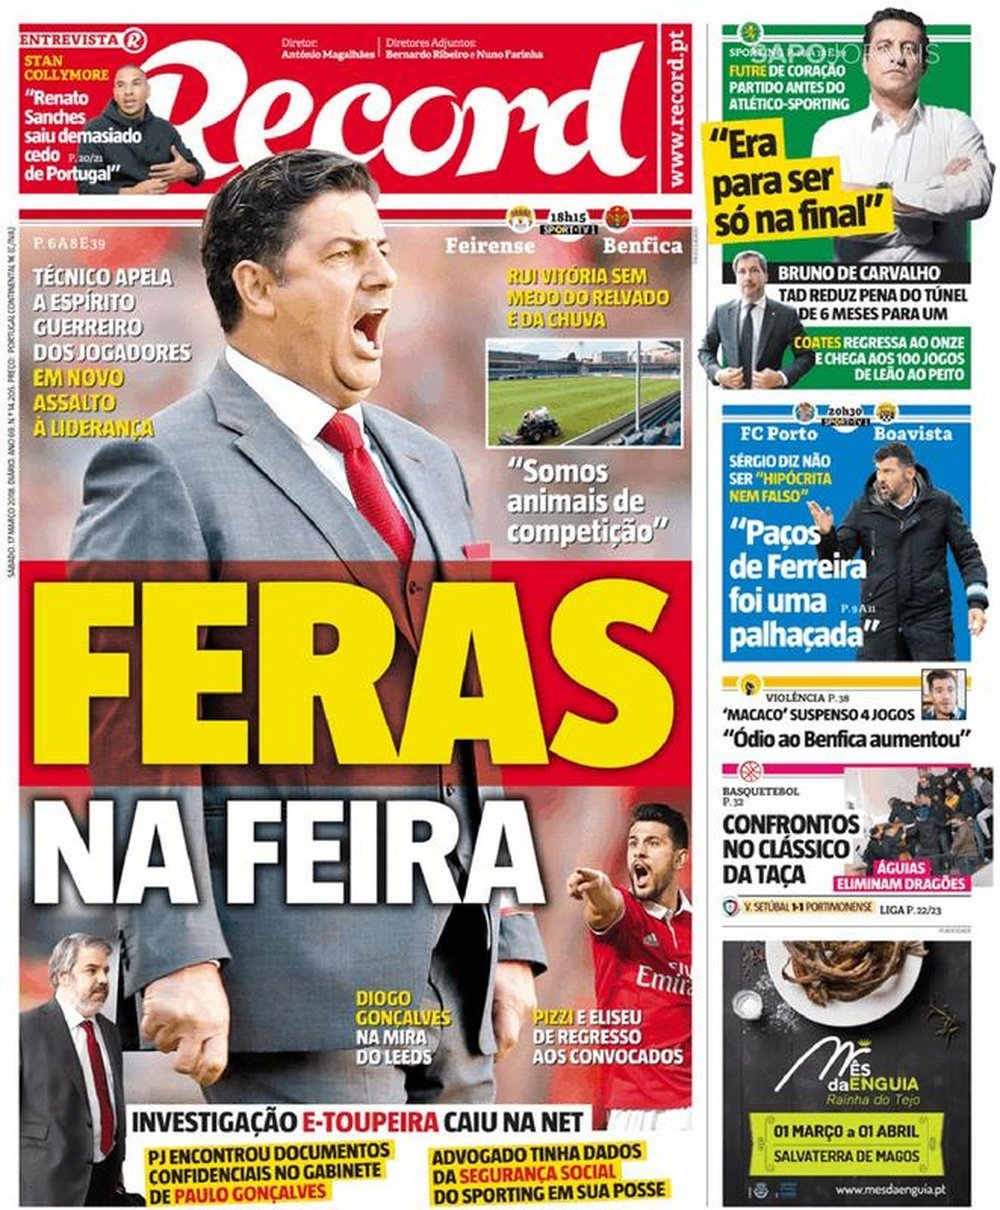 Capa do jornal 'Record', 17/03/2018. Record